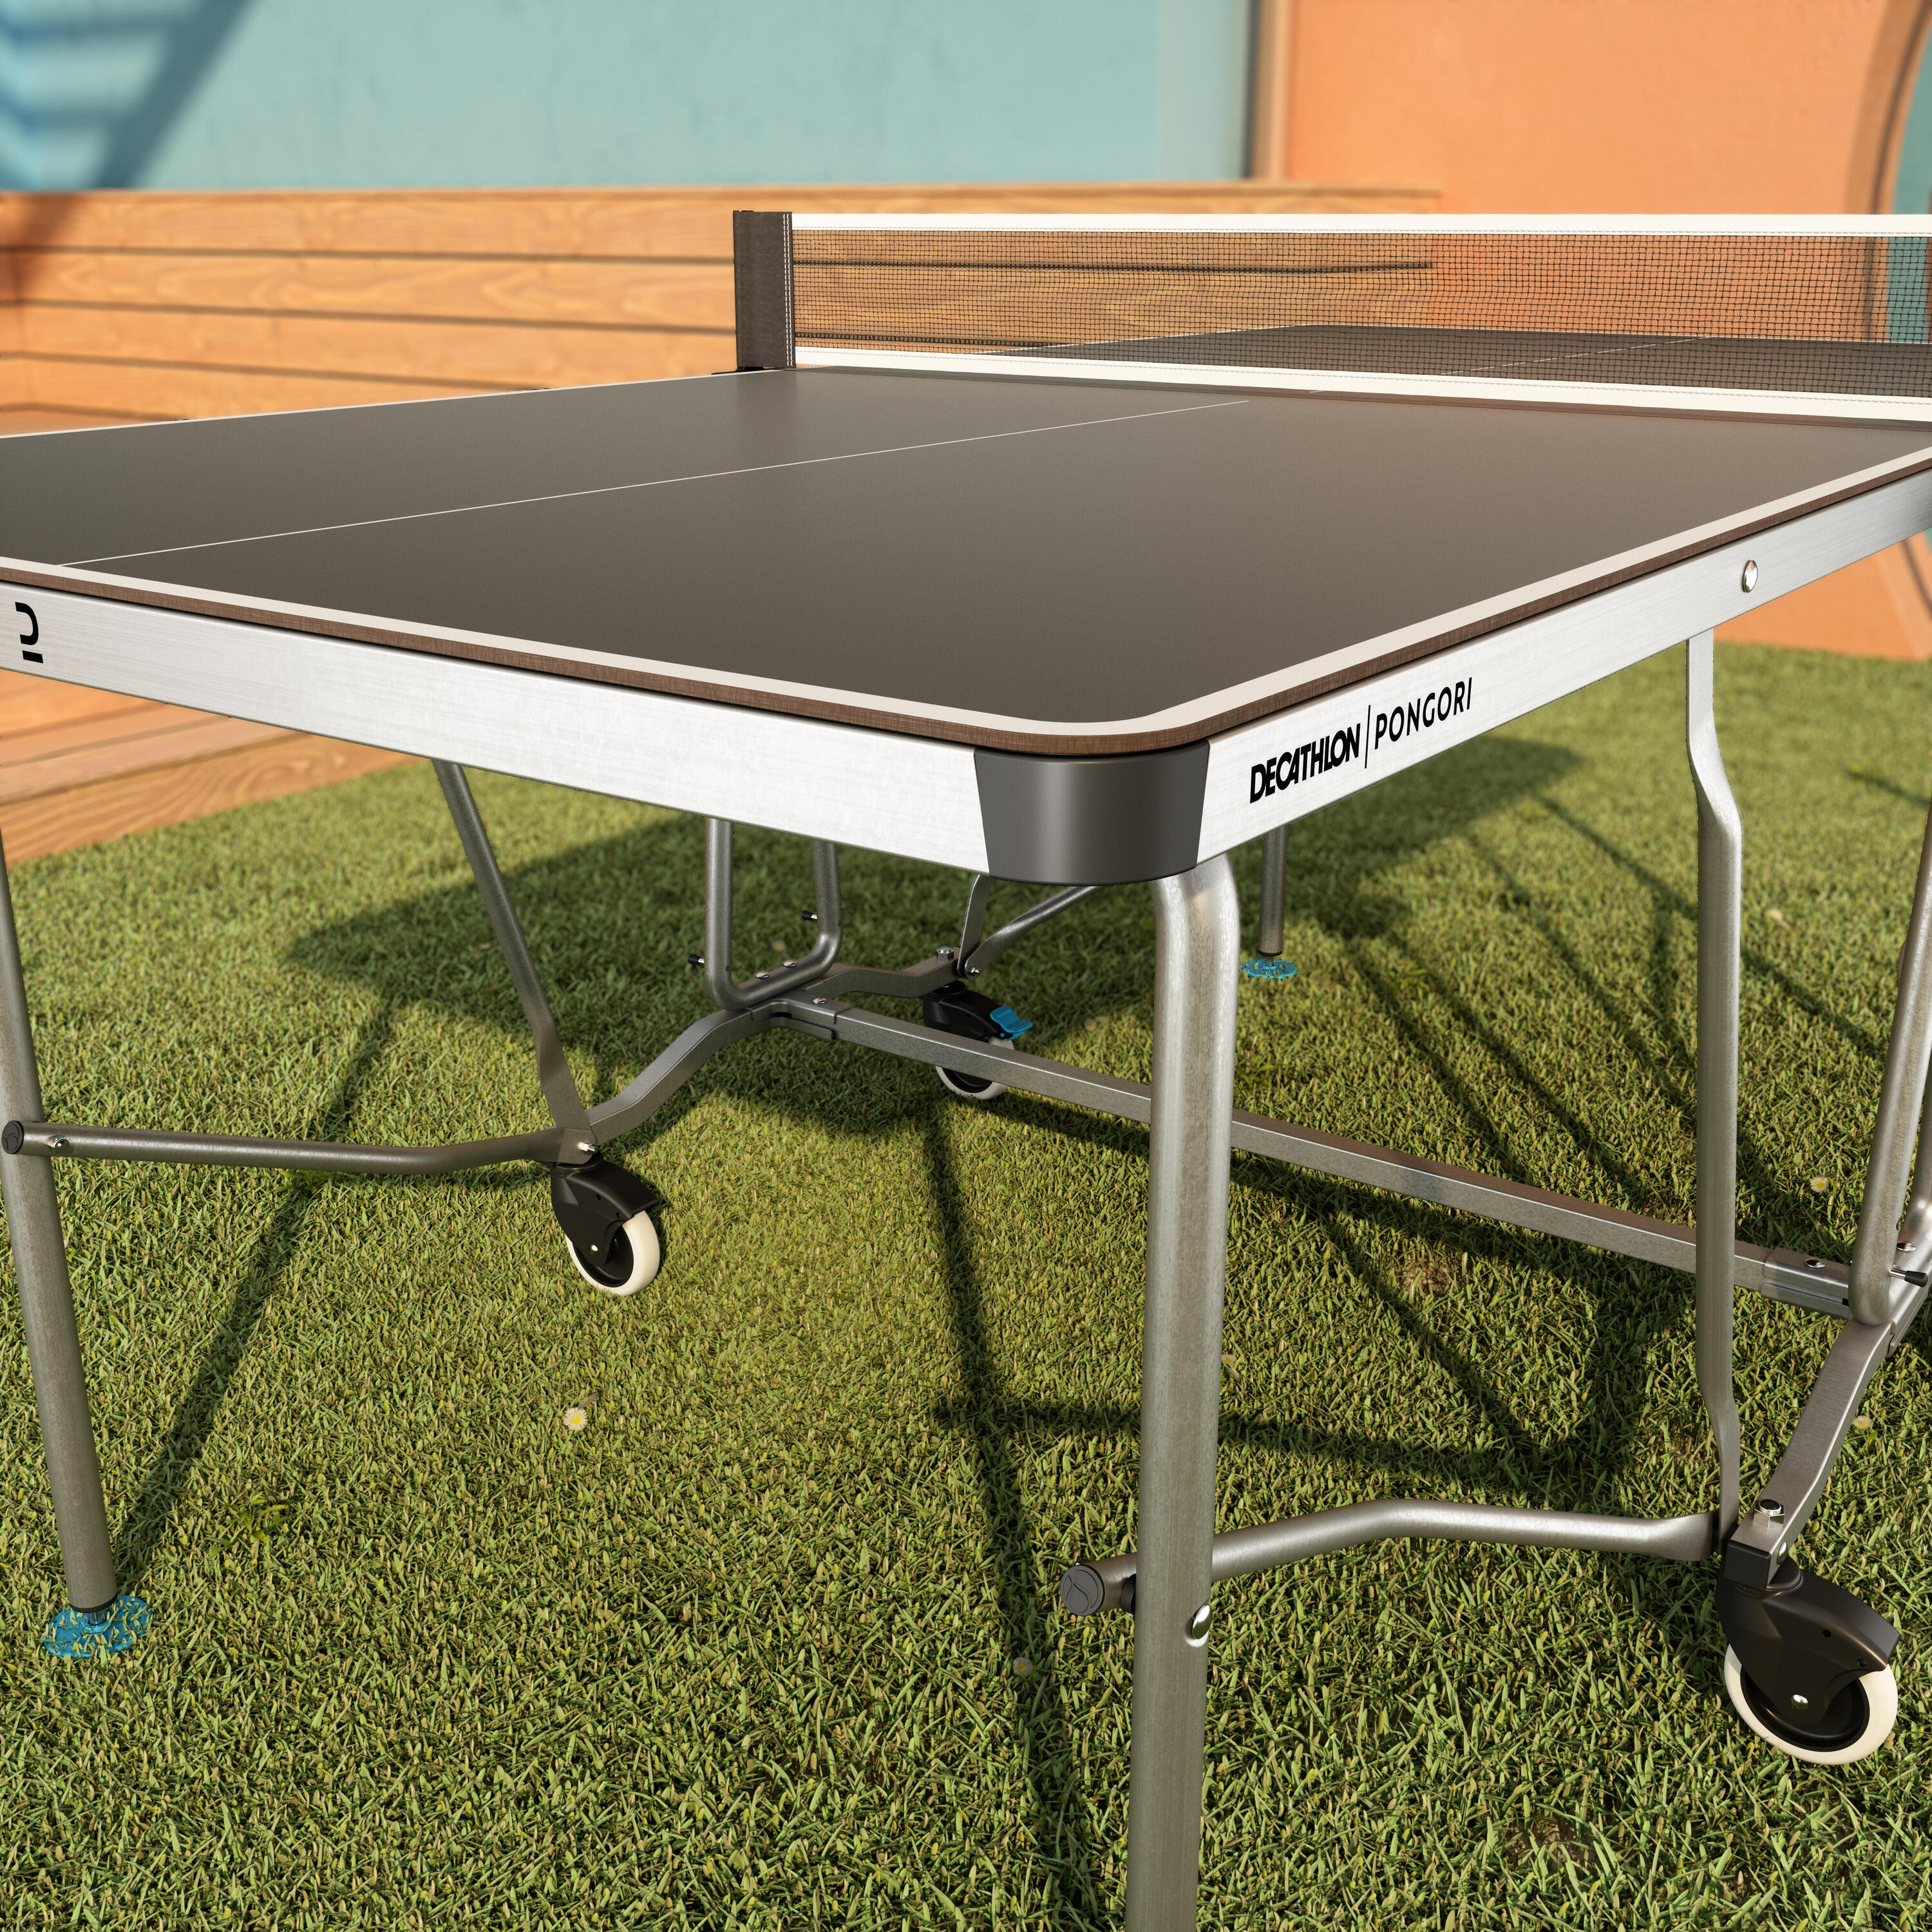 Table Tennis Table PPT 530 Outdoor Medium.2 4/11